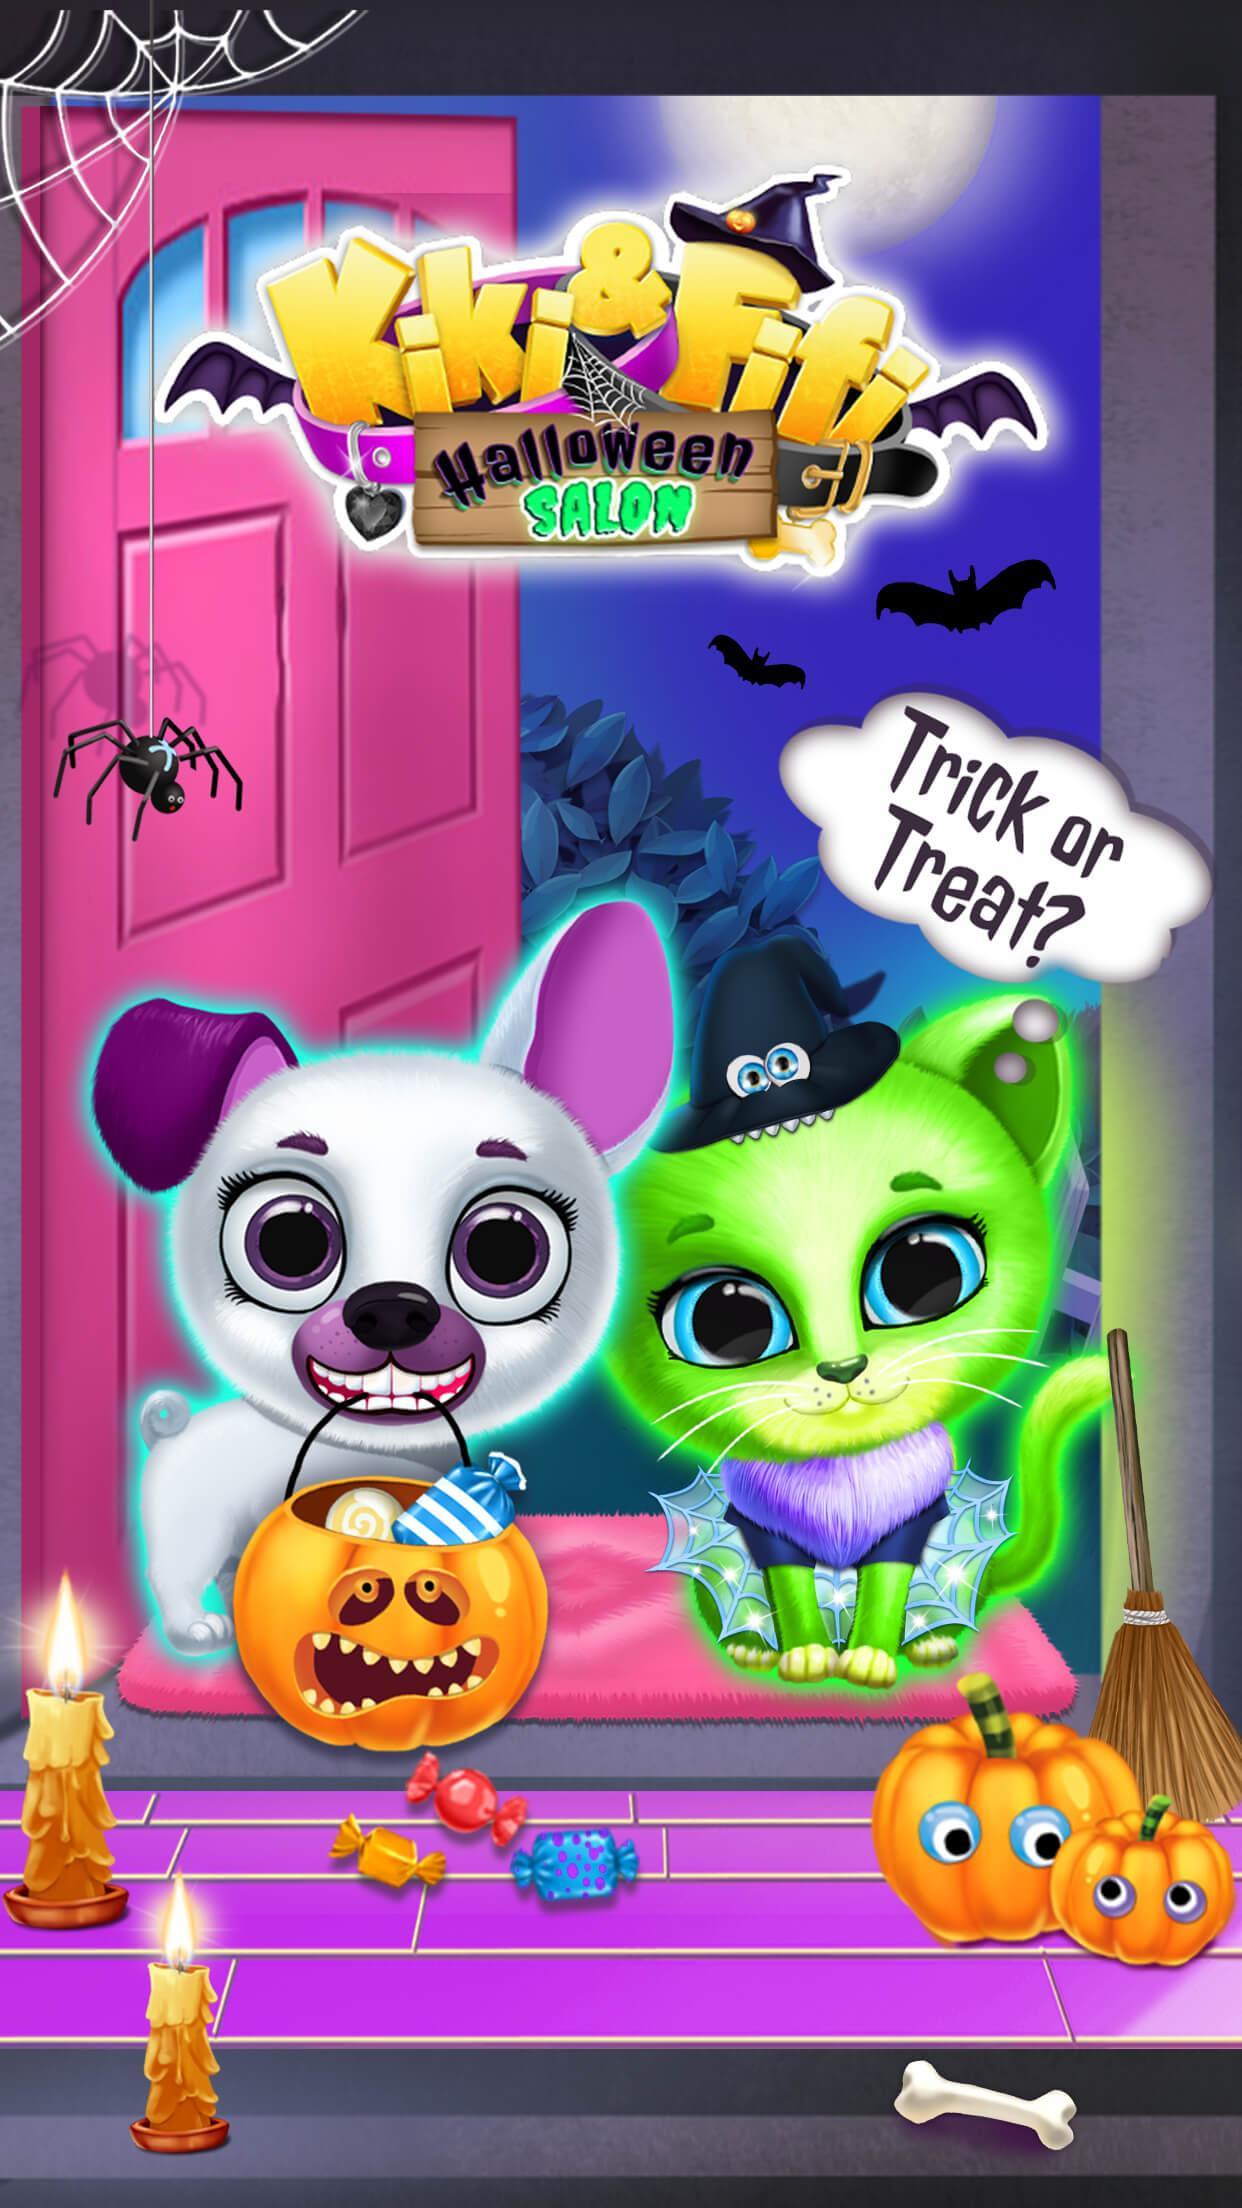 Kiki & Fifi Halloween Salon - Scary Pet Makeoverのキャプチャ